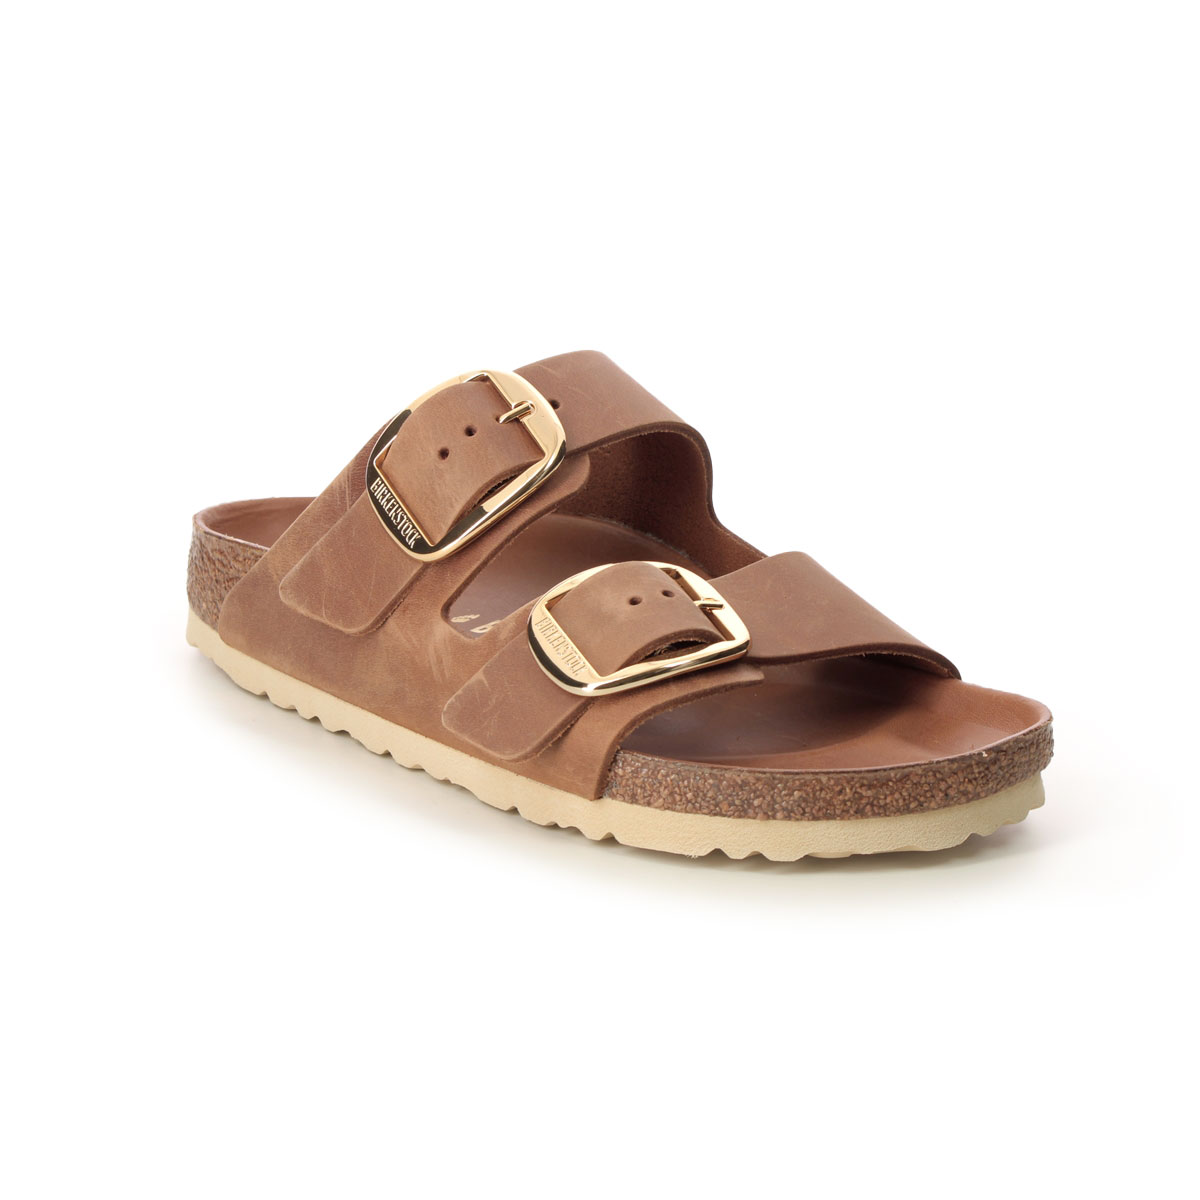 Birkenstock Arizona Big Buckle Tan Leather Womens Slide Sandals 101107321 in a Plain Leather in Size 36